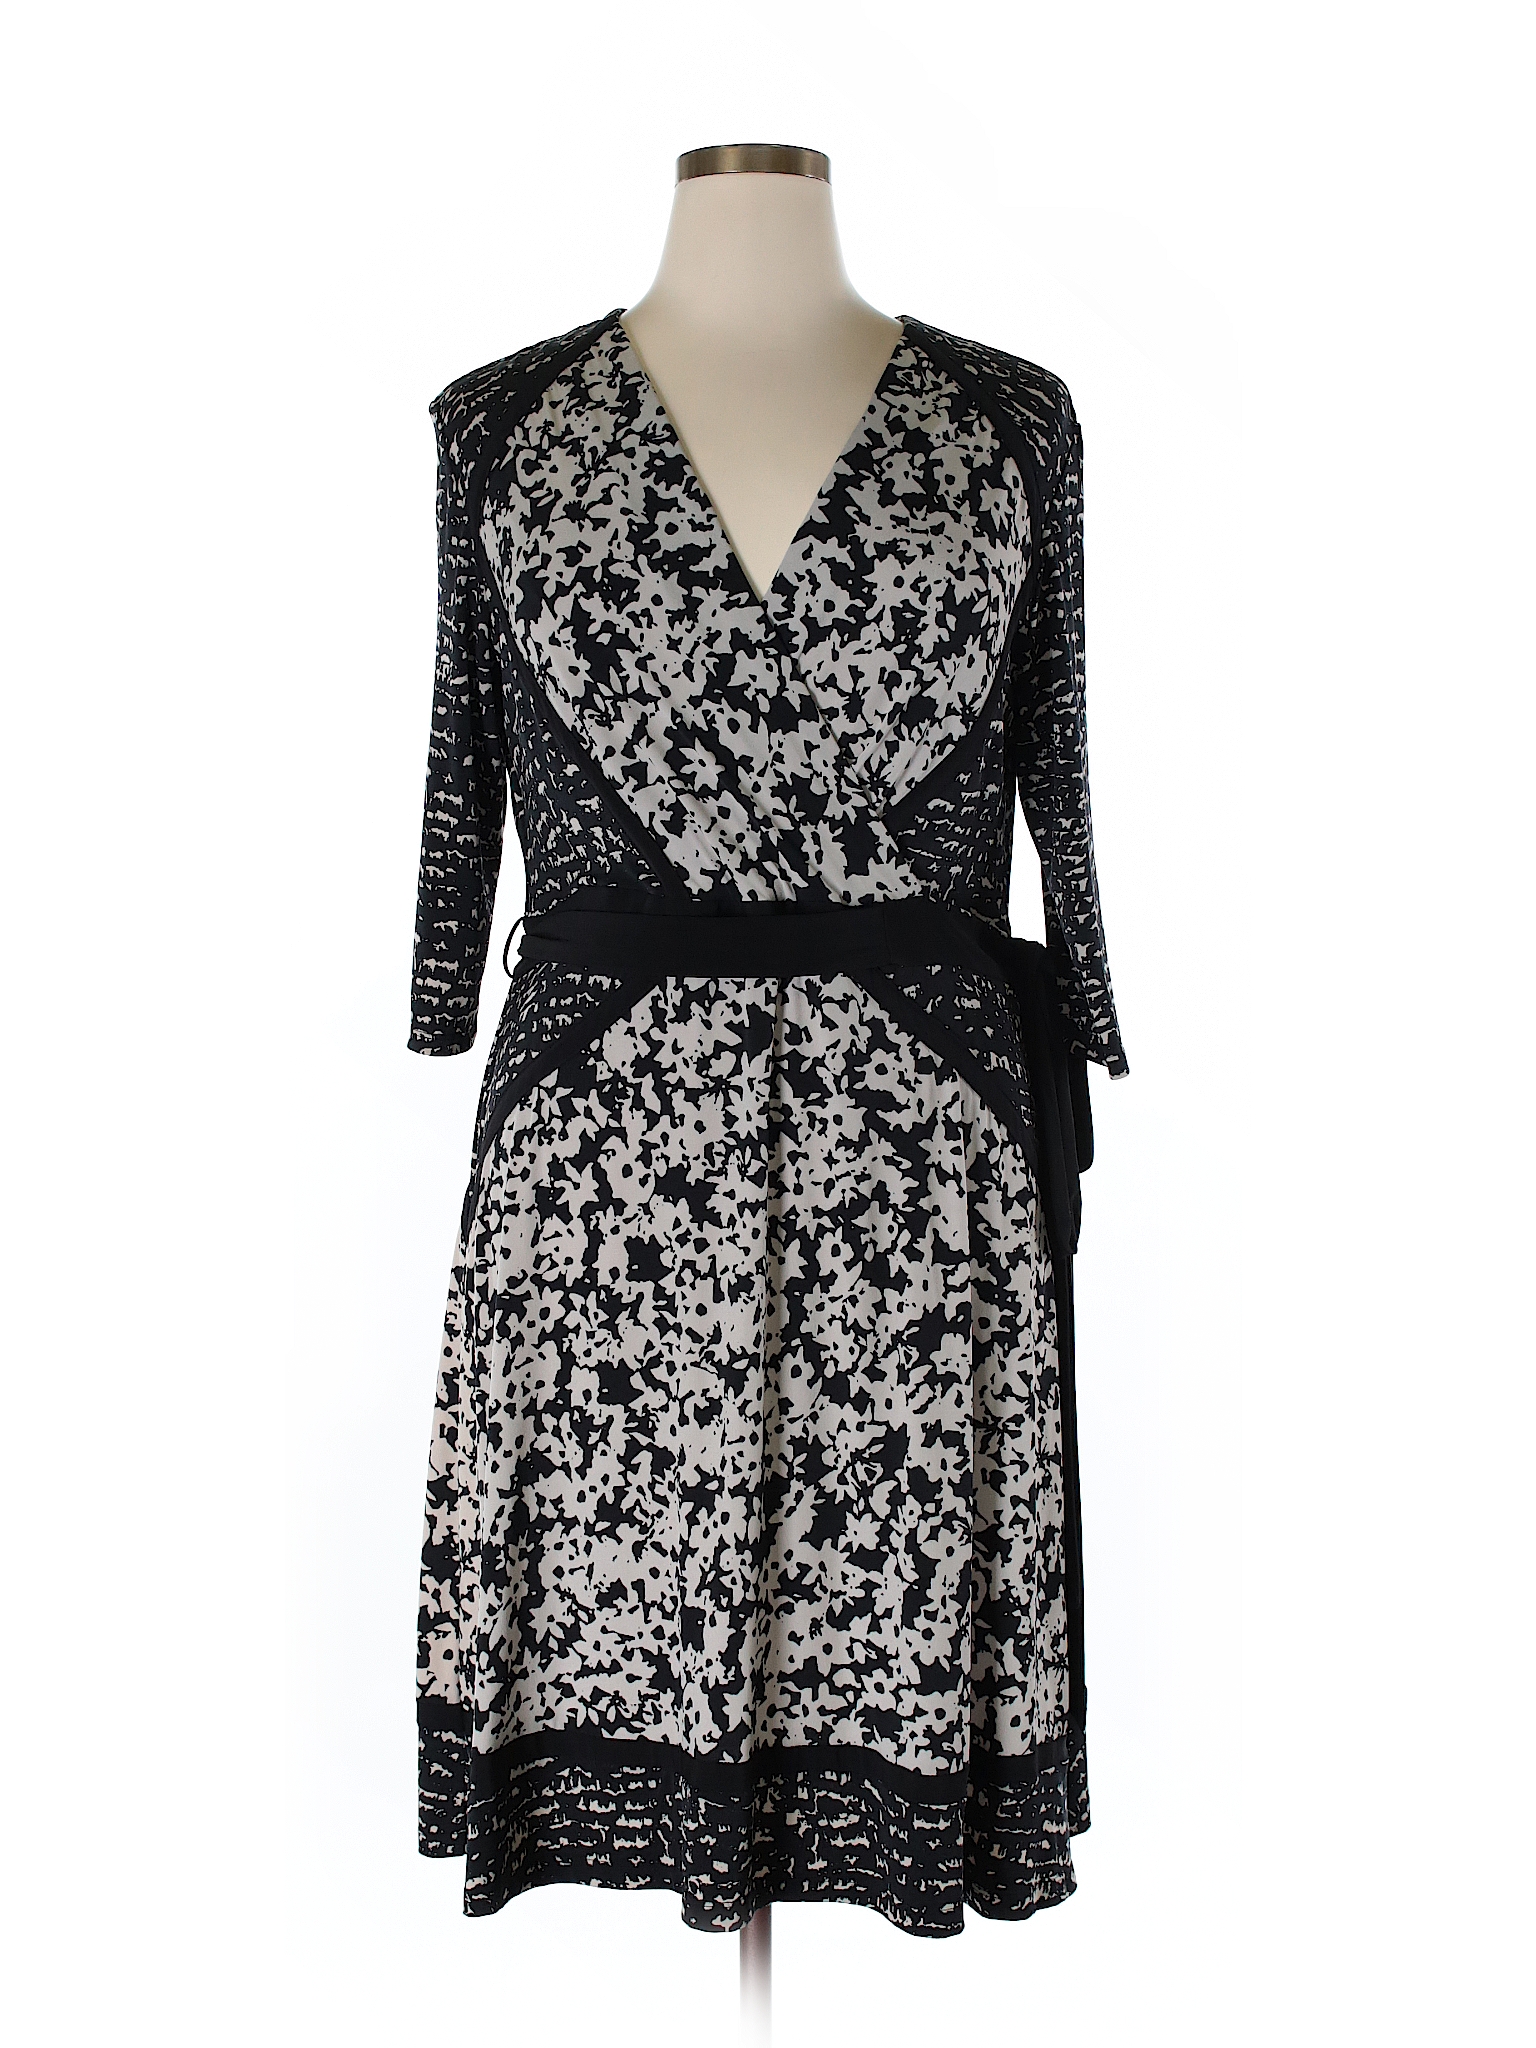 Taylor Print Black Casual Dress Size 14 - 73% off | thredUP